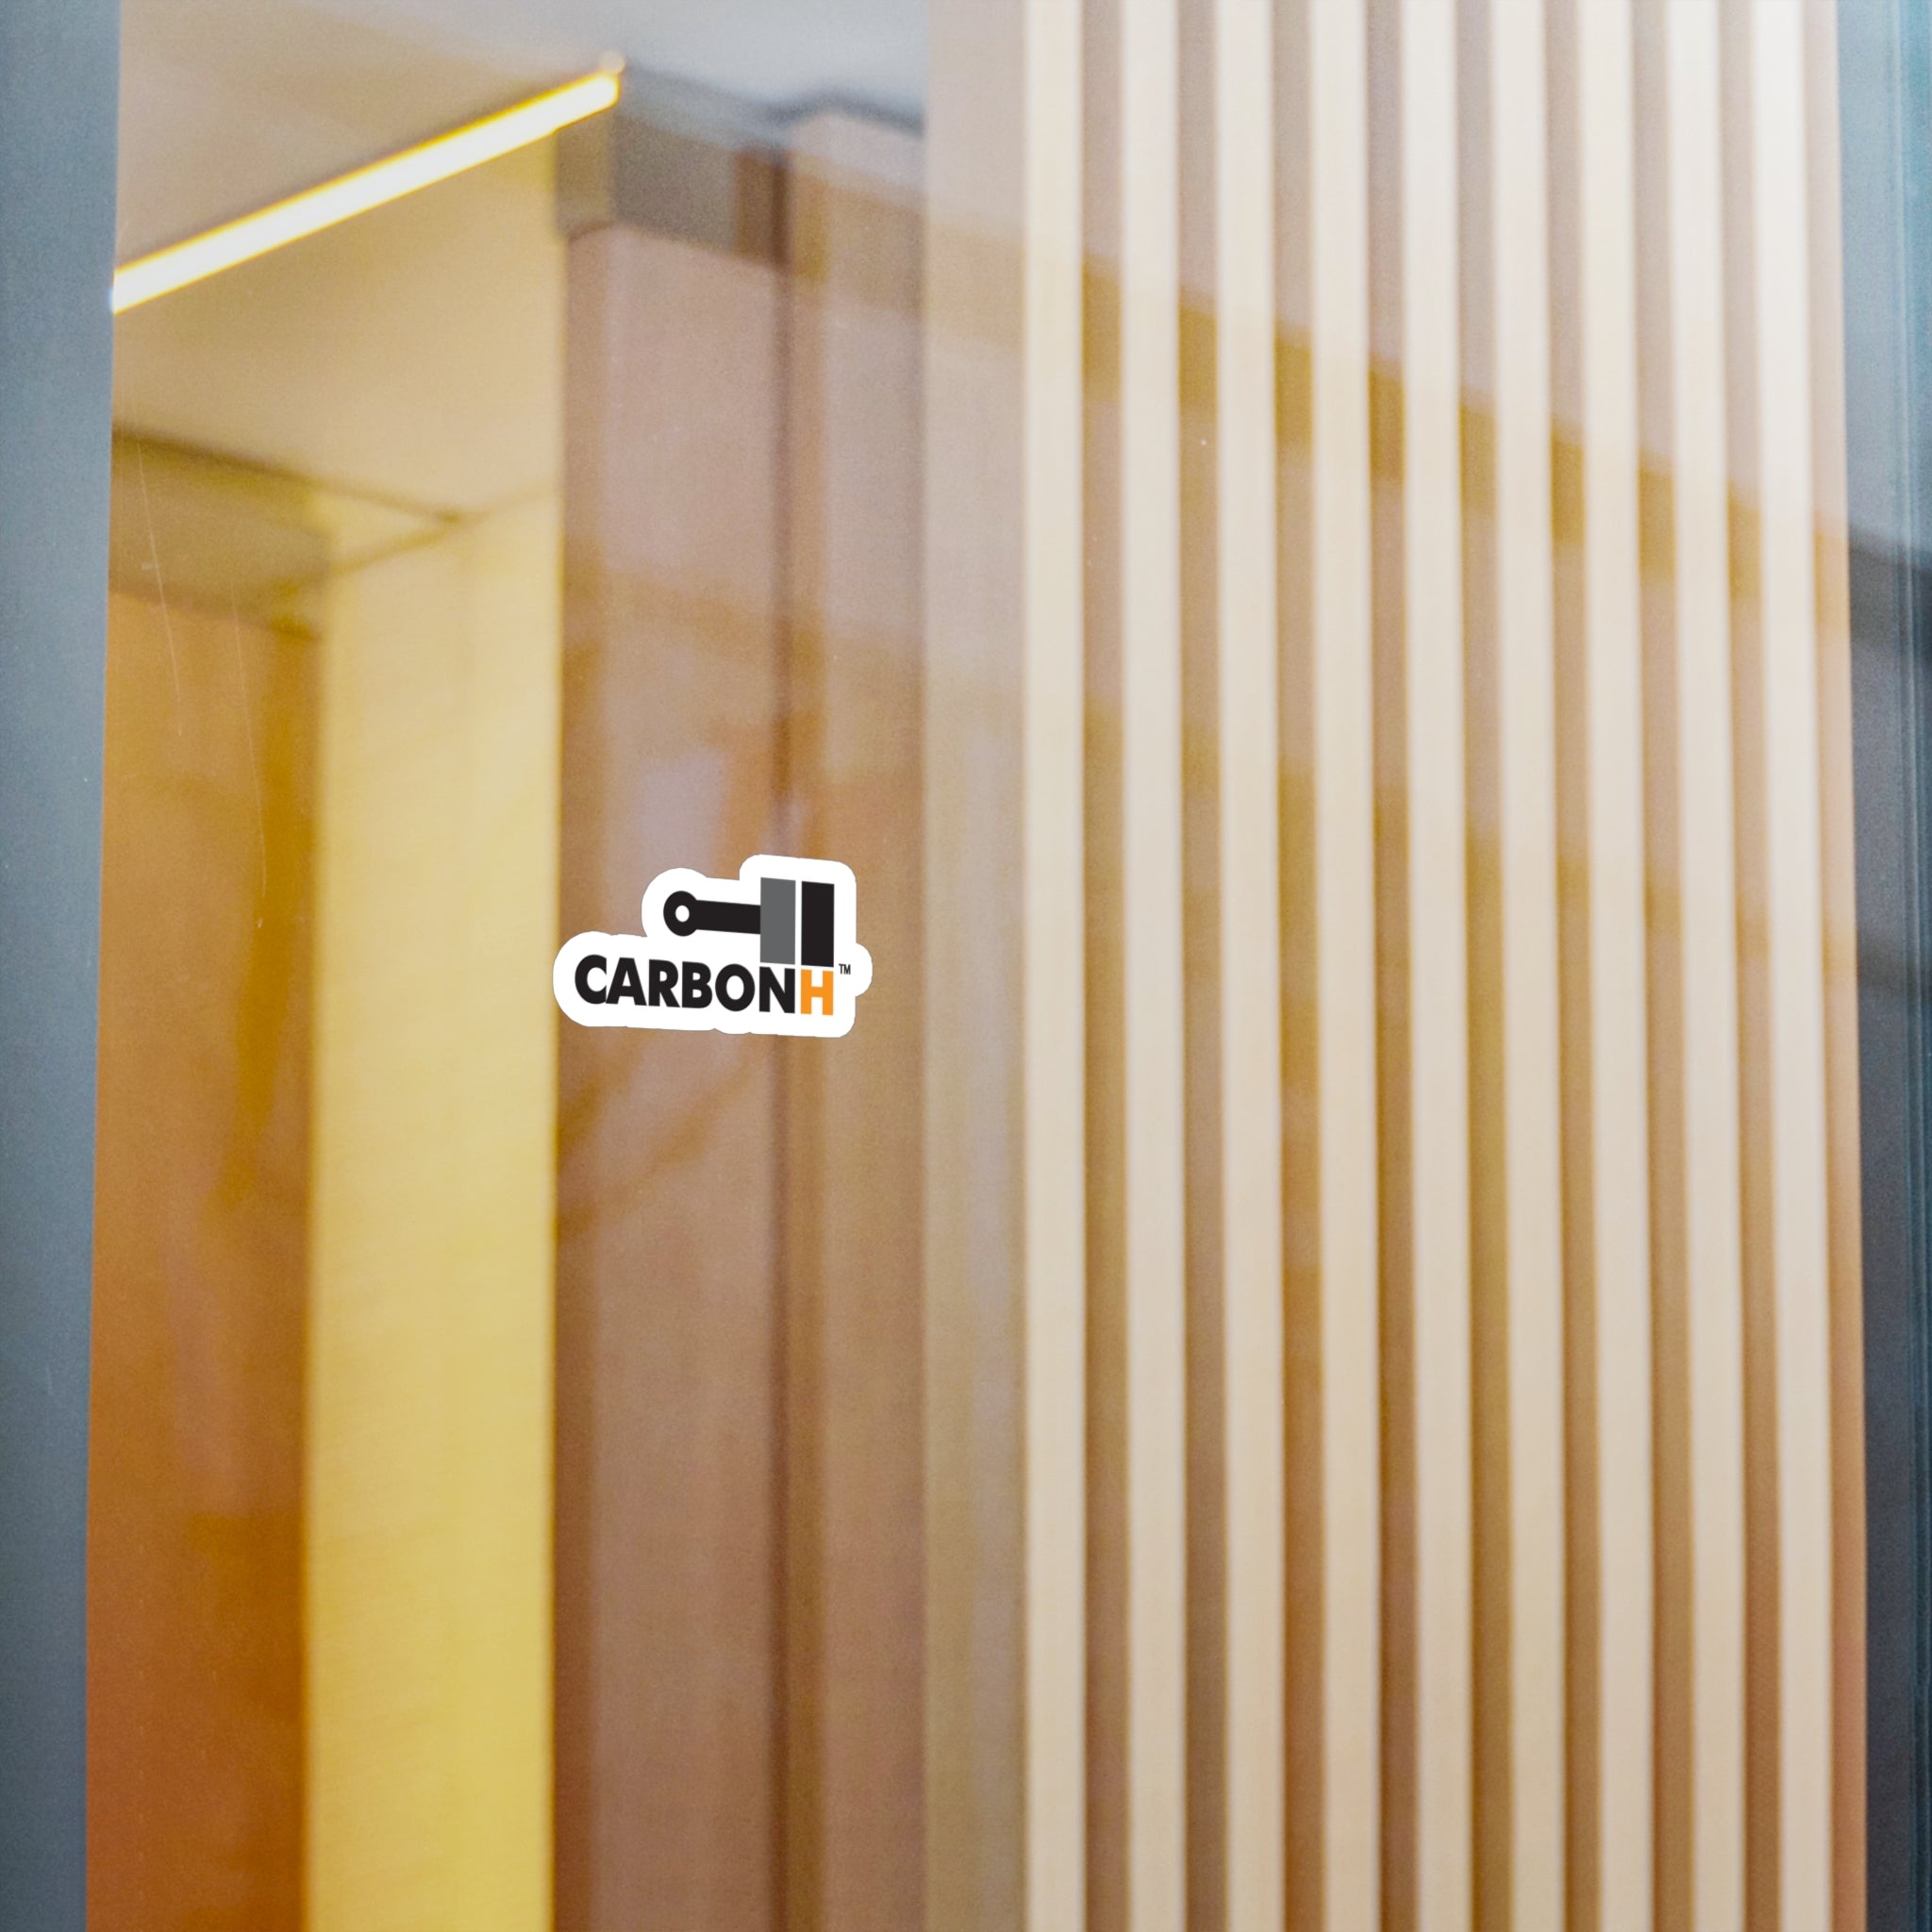 CARBONH Sticker